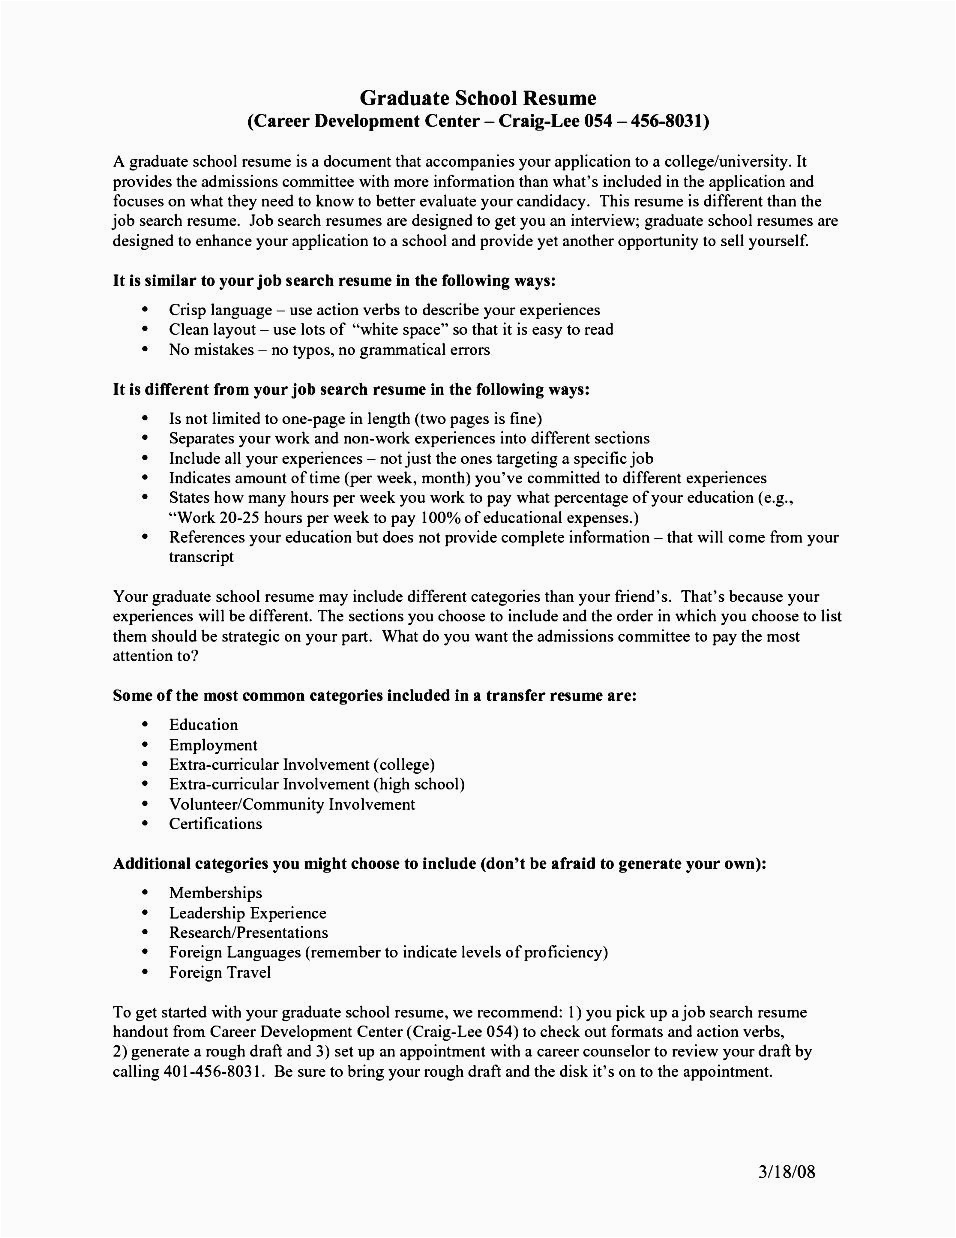 Sample Of Resume for Graduate School Application Academic Resume for Graduate School